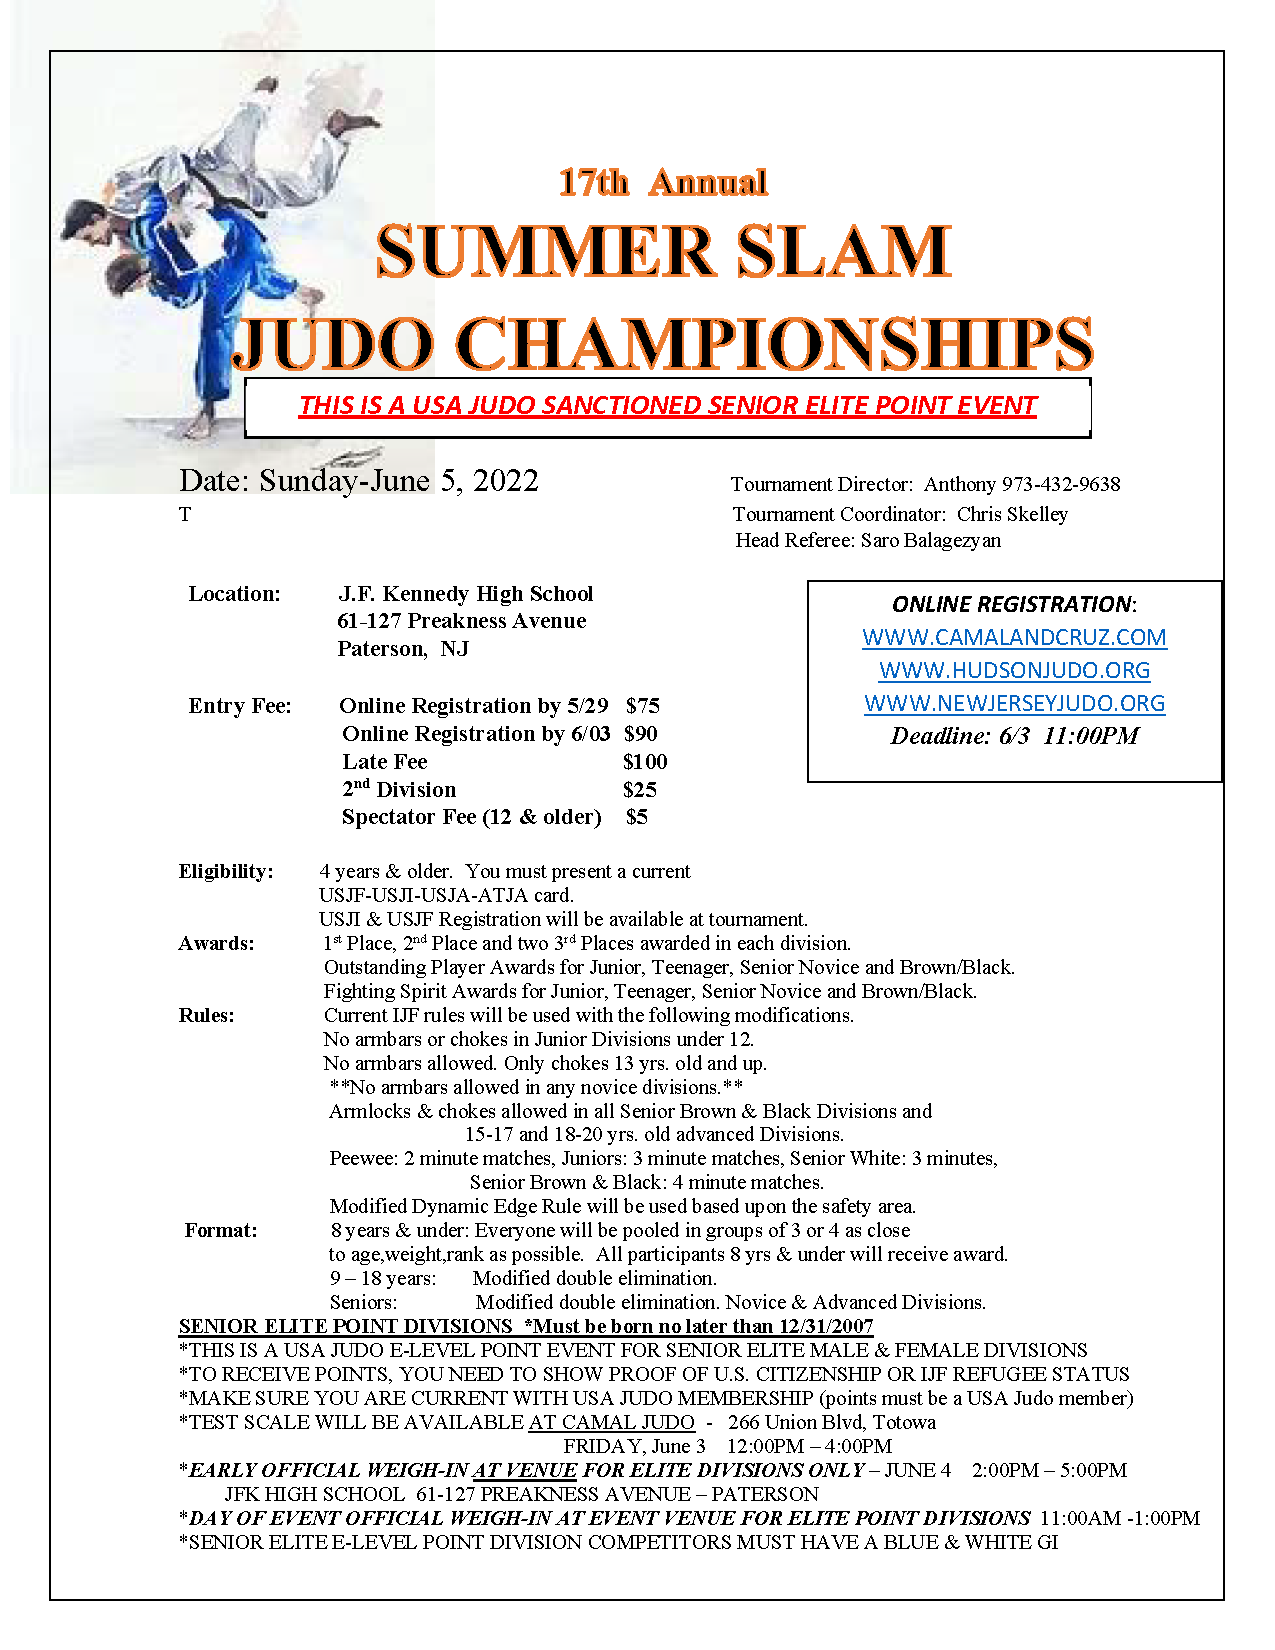 17th Annual Summer Slam Judo Championships